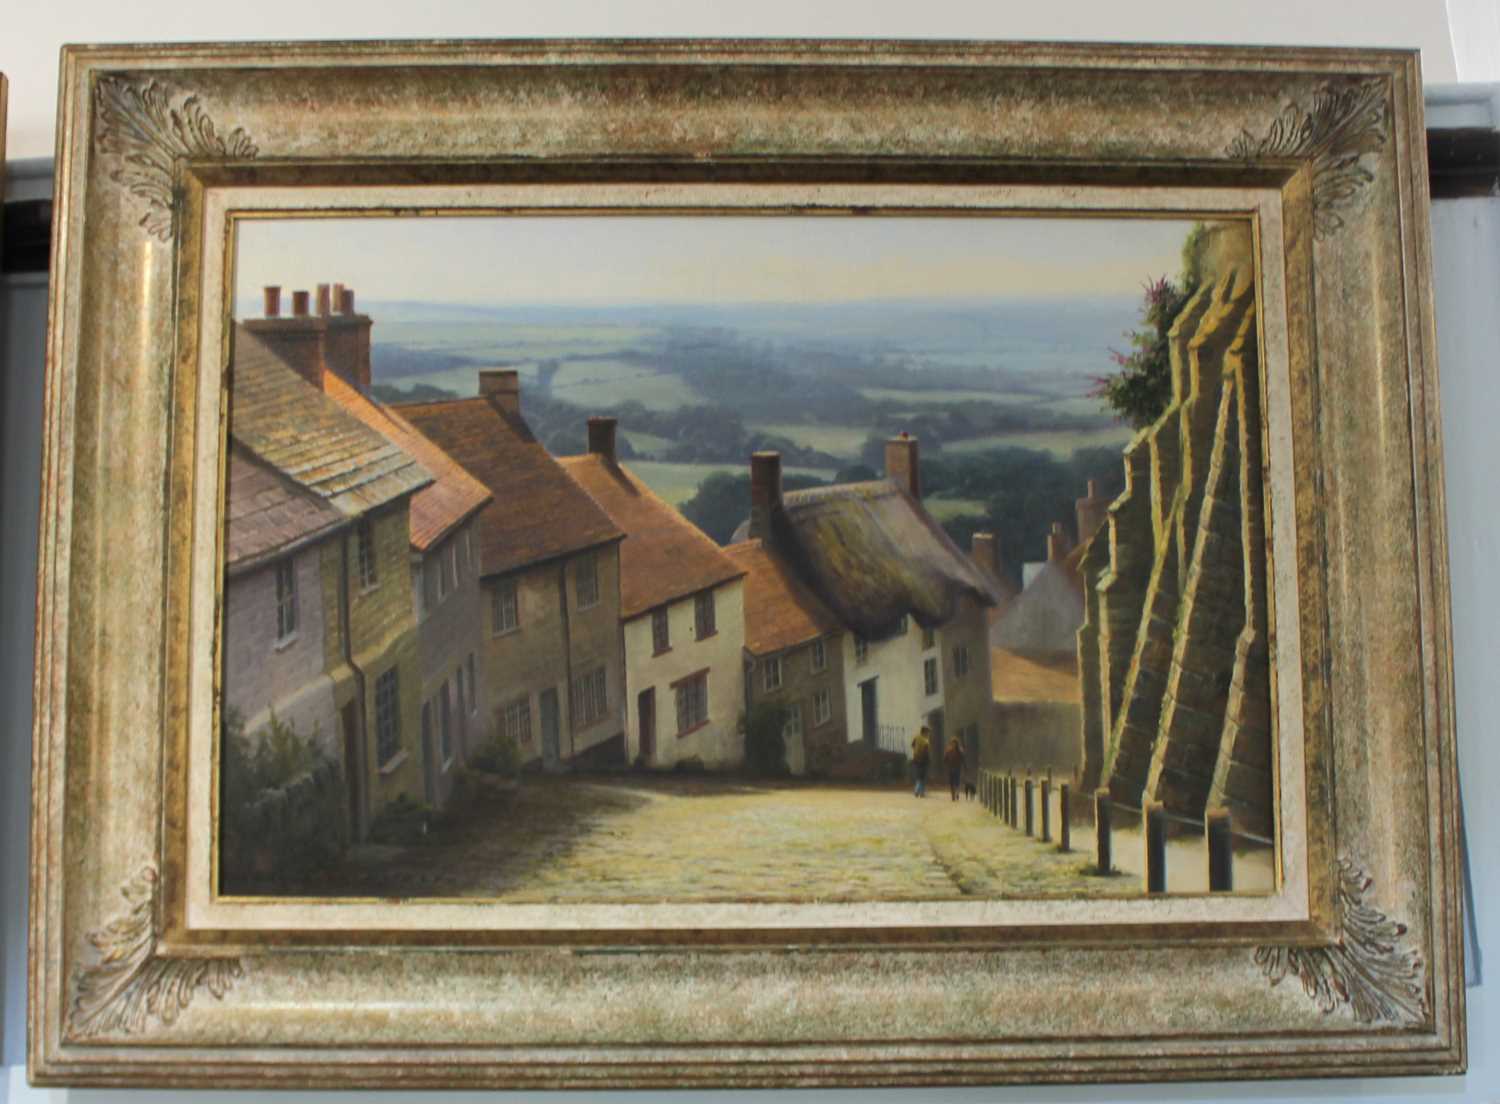 Duncan Palmar (20th century), Dorset landscape, 'Over the chimneys, Gold Hill', Shaftesbury, oil